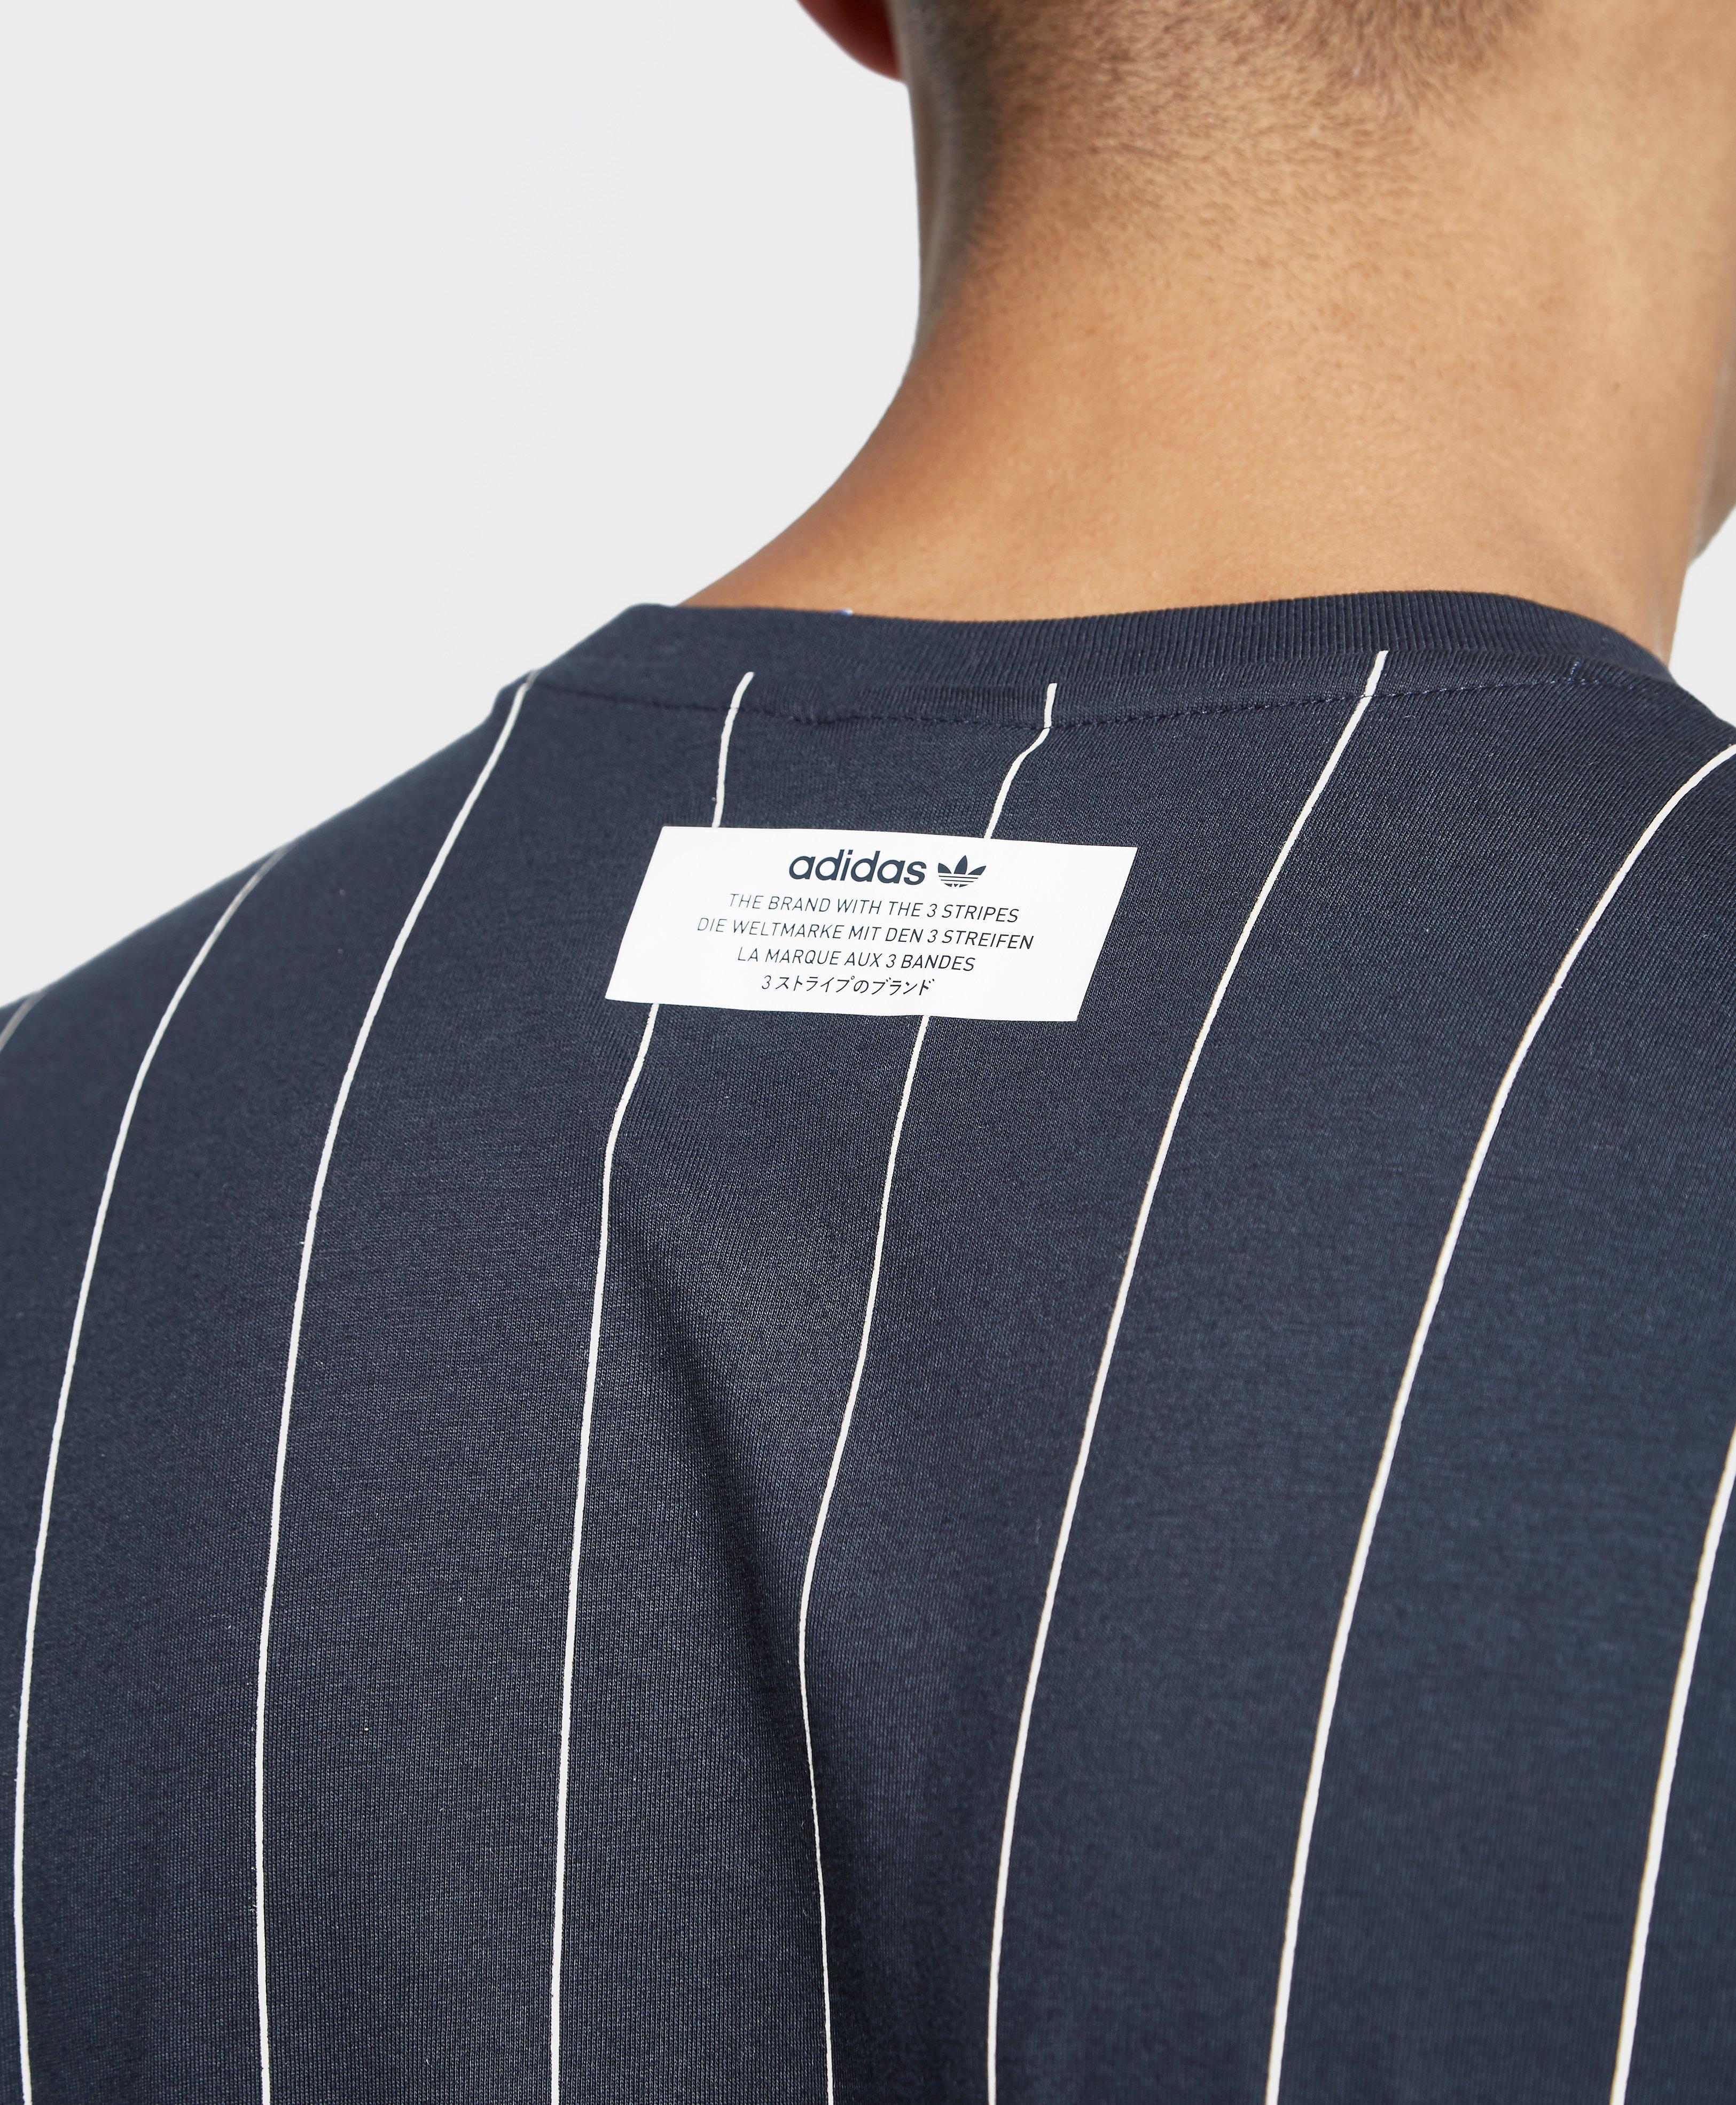 adidas Originals Tokyo Pinstripe T-shirt in Blue for Men - Lyst